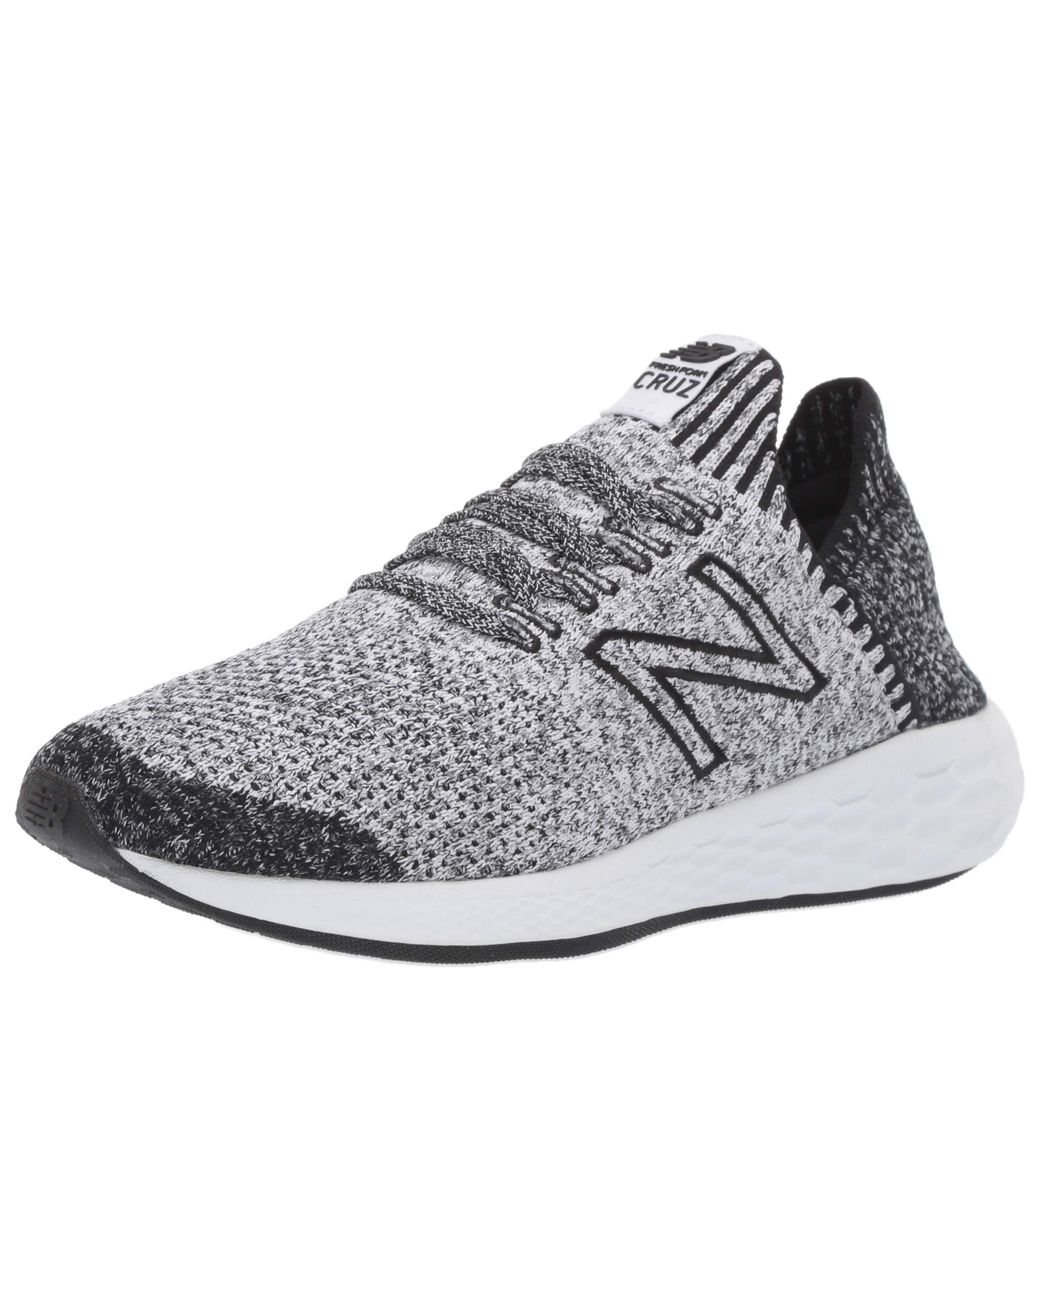 New Balance Fresh Foam Cruz Sockfit Running Shoes in Black/White (Black) -  Save 69% - Lyst